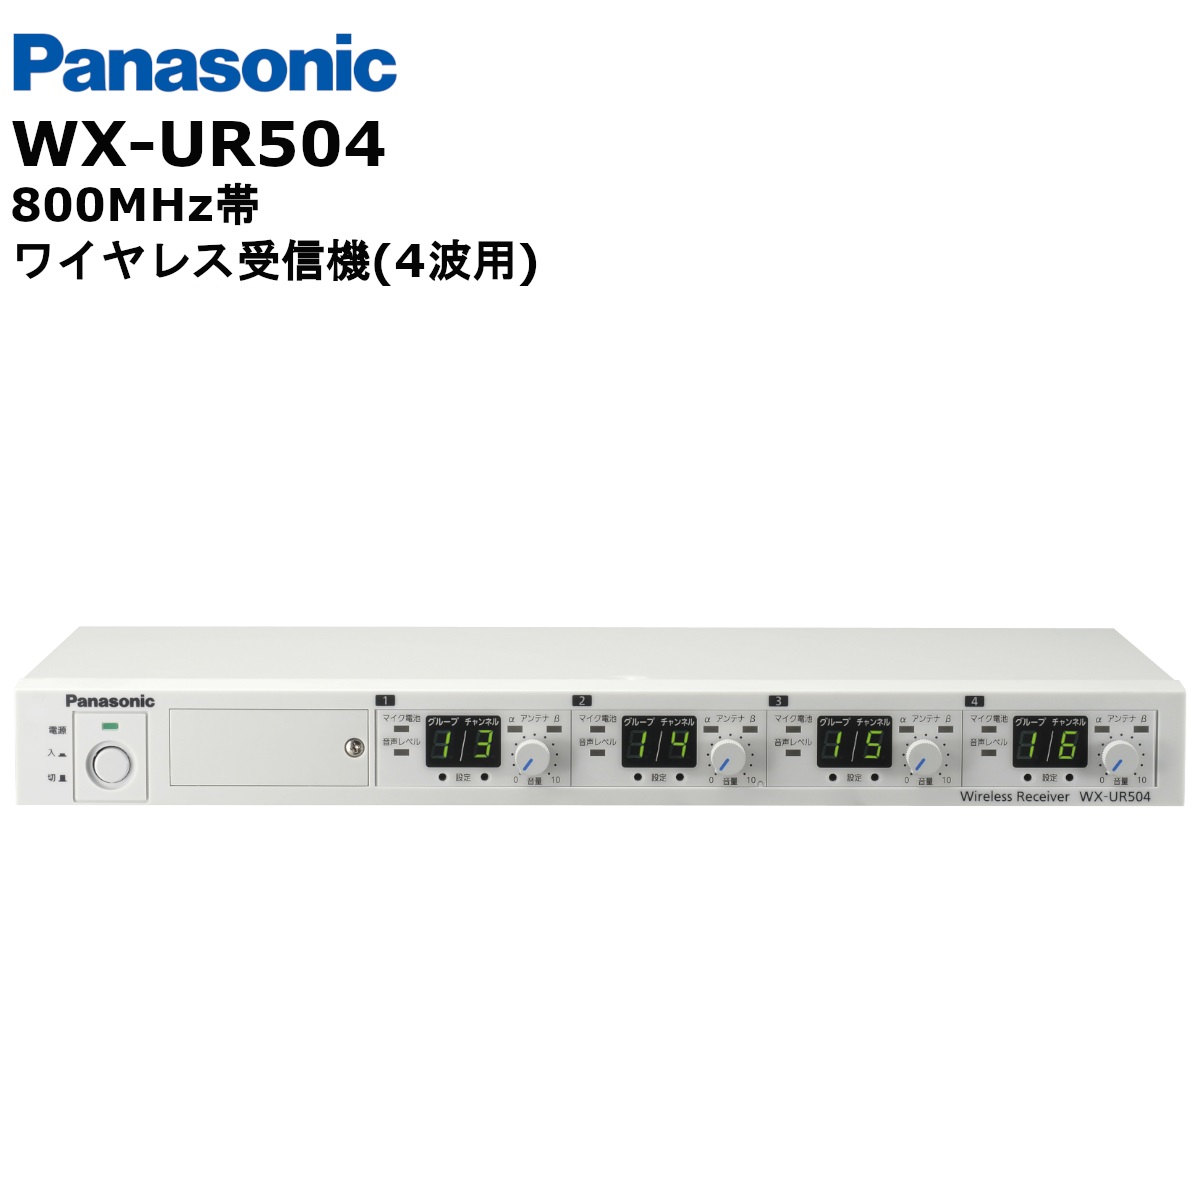 Panasonic/WX-UR504/WX-4965/受信機アンテナセット-